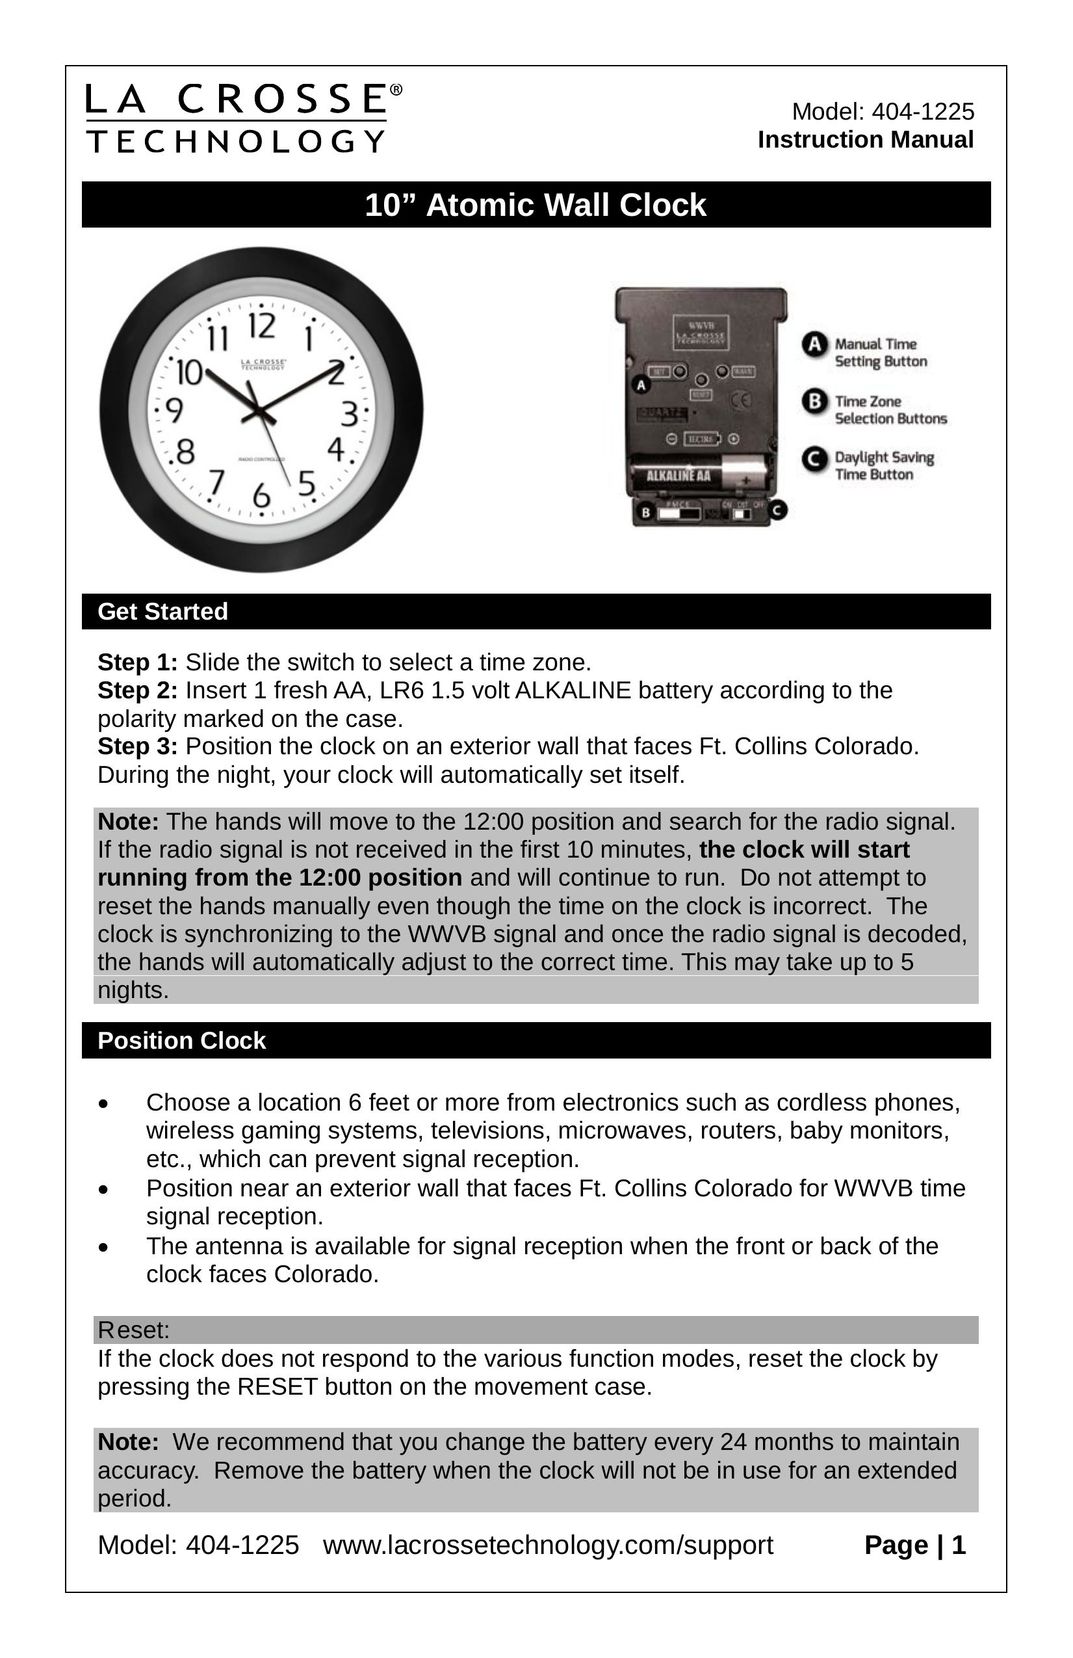 La Crosse Technology 404-1225 Clock User Manual